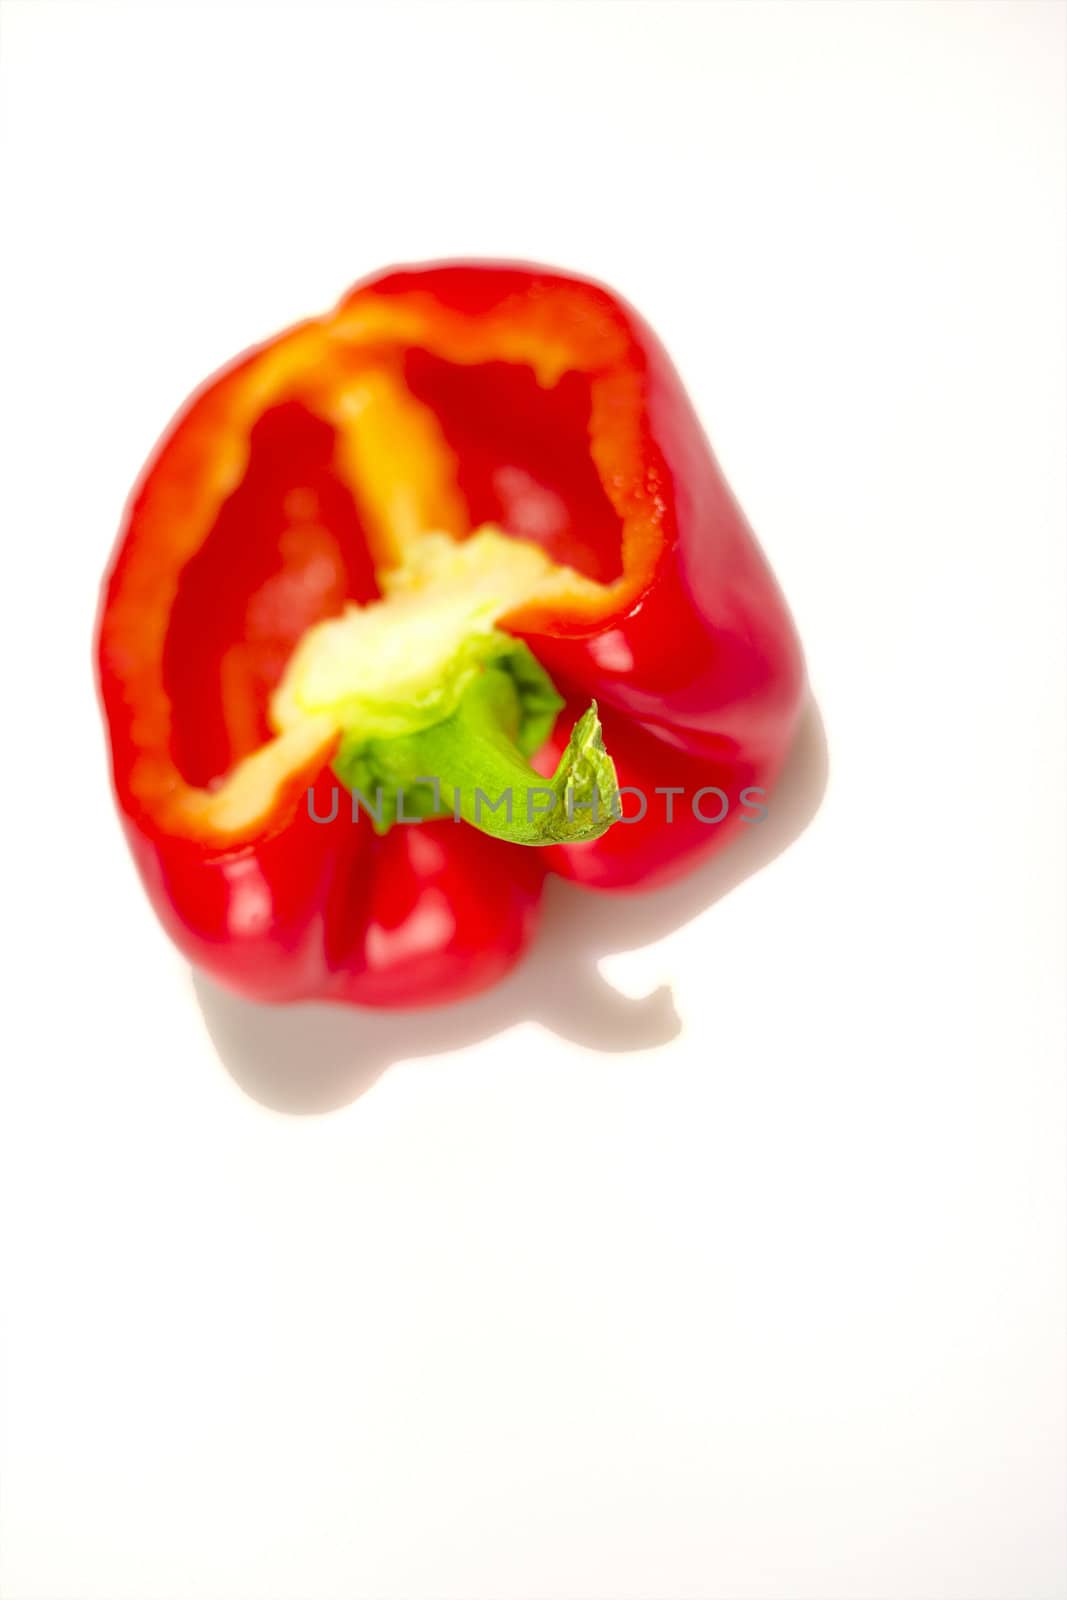 A sliced red pepper